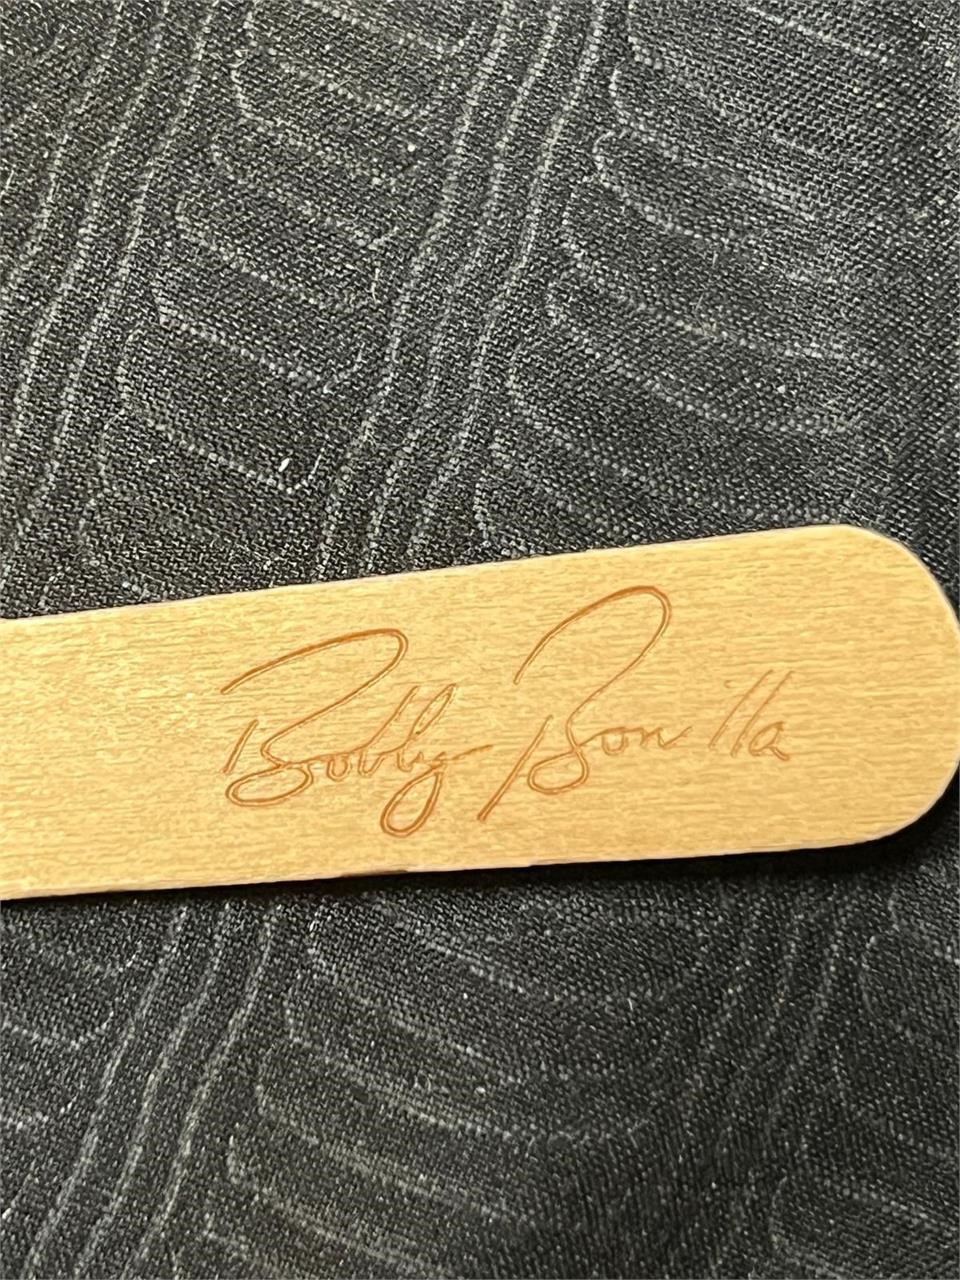 Vintage Good Humor Bobby Bonilla Promo Bat / Stick